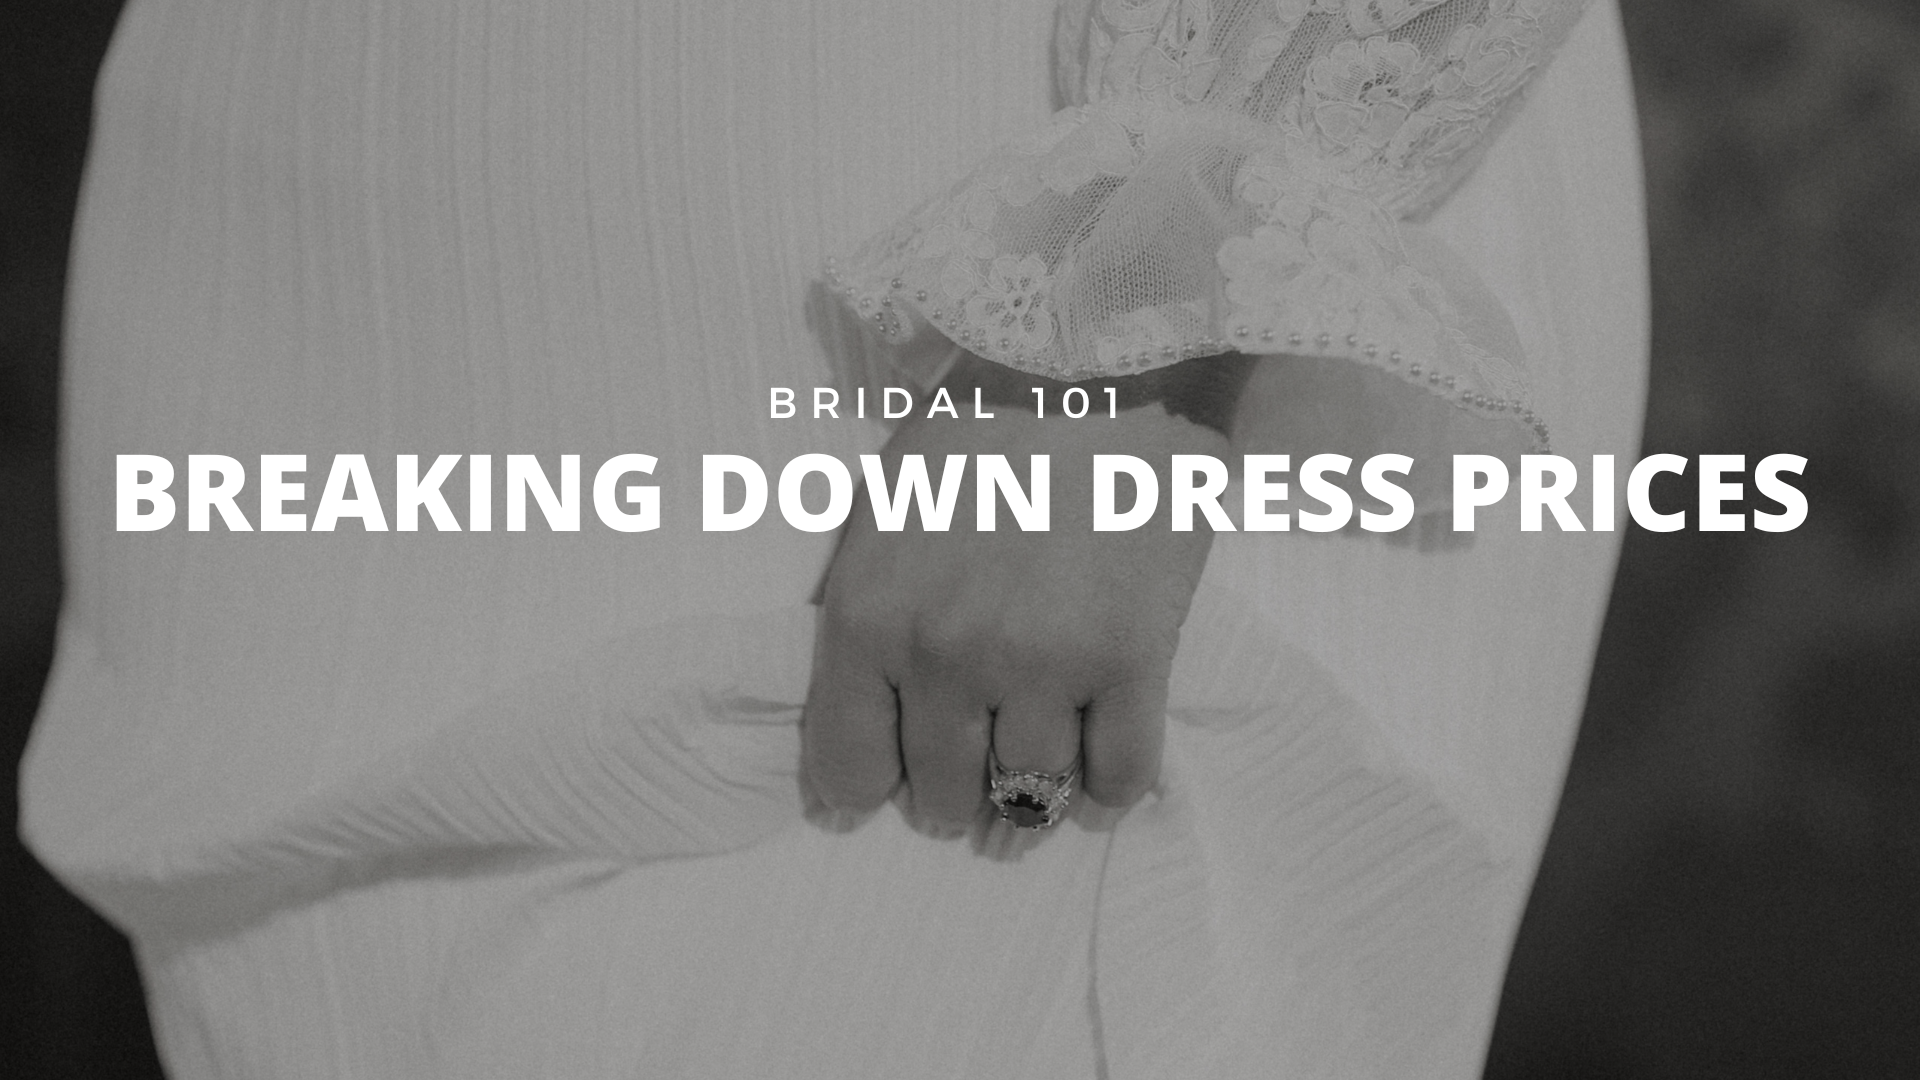 Breaking down wedding dress prices Image